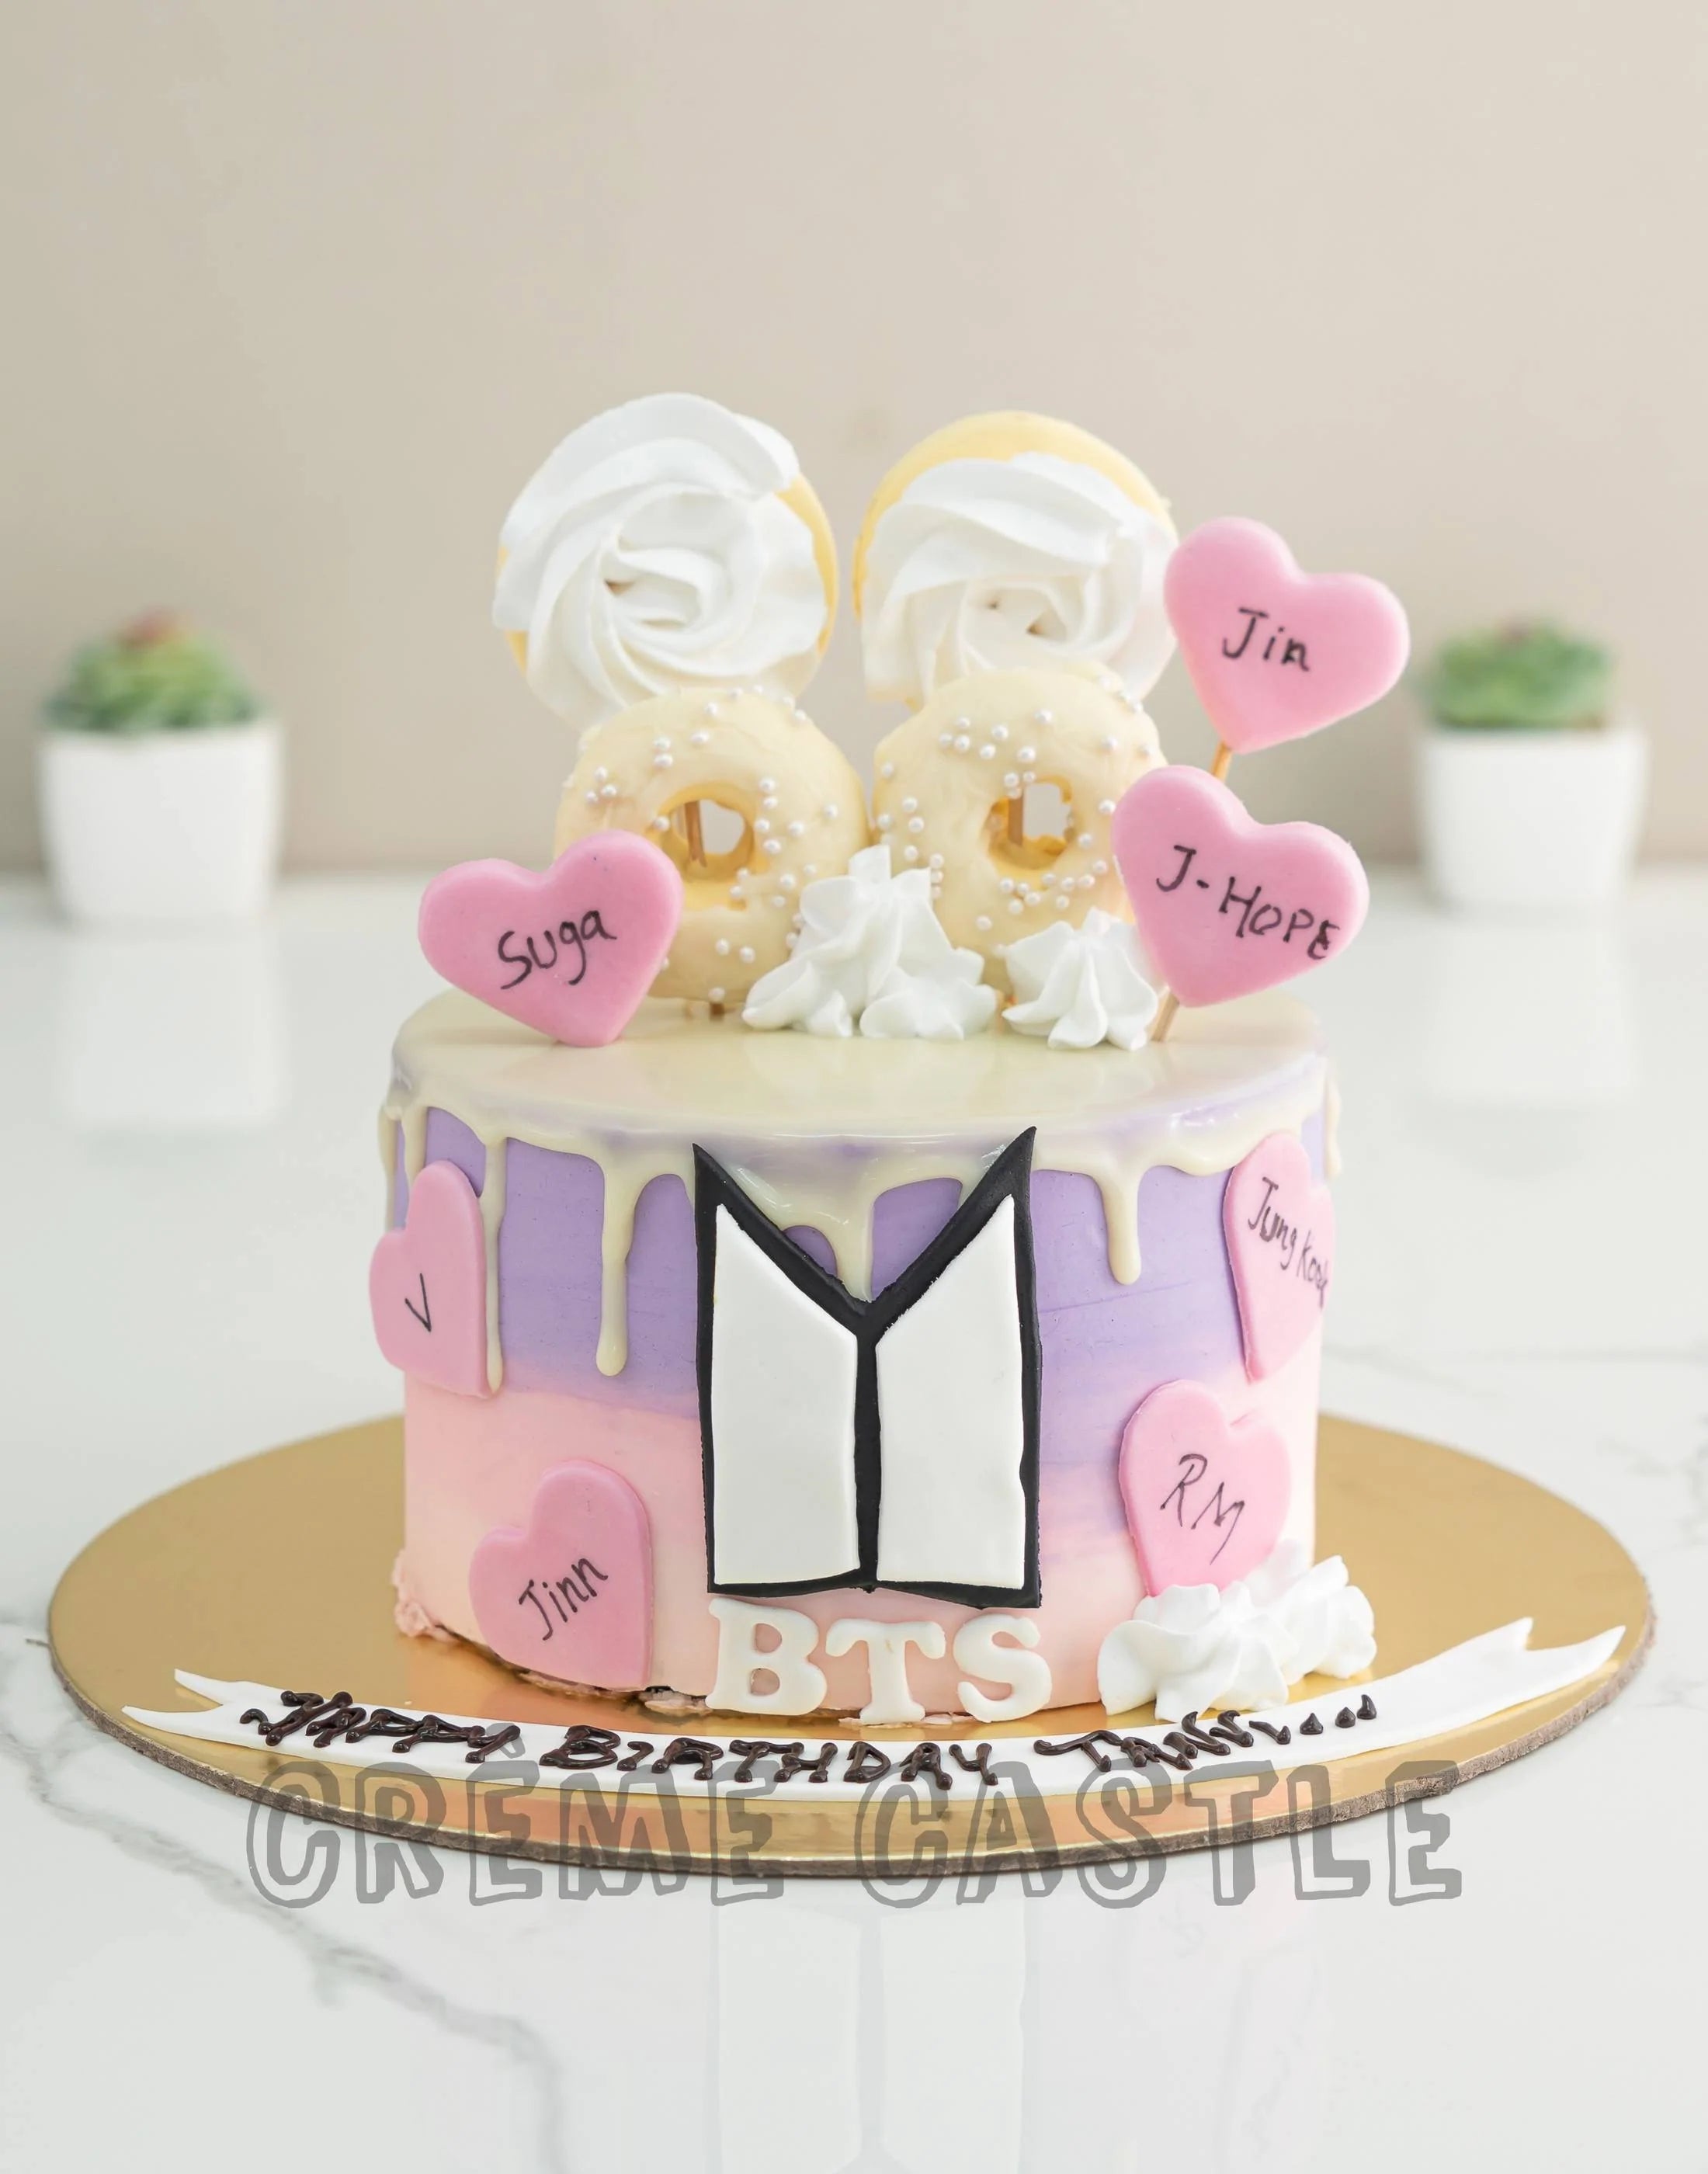 BTS Theme Cake | Bts cake, Cake, Themed cakes